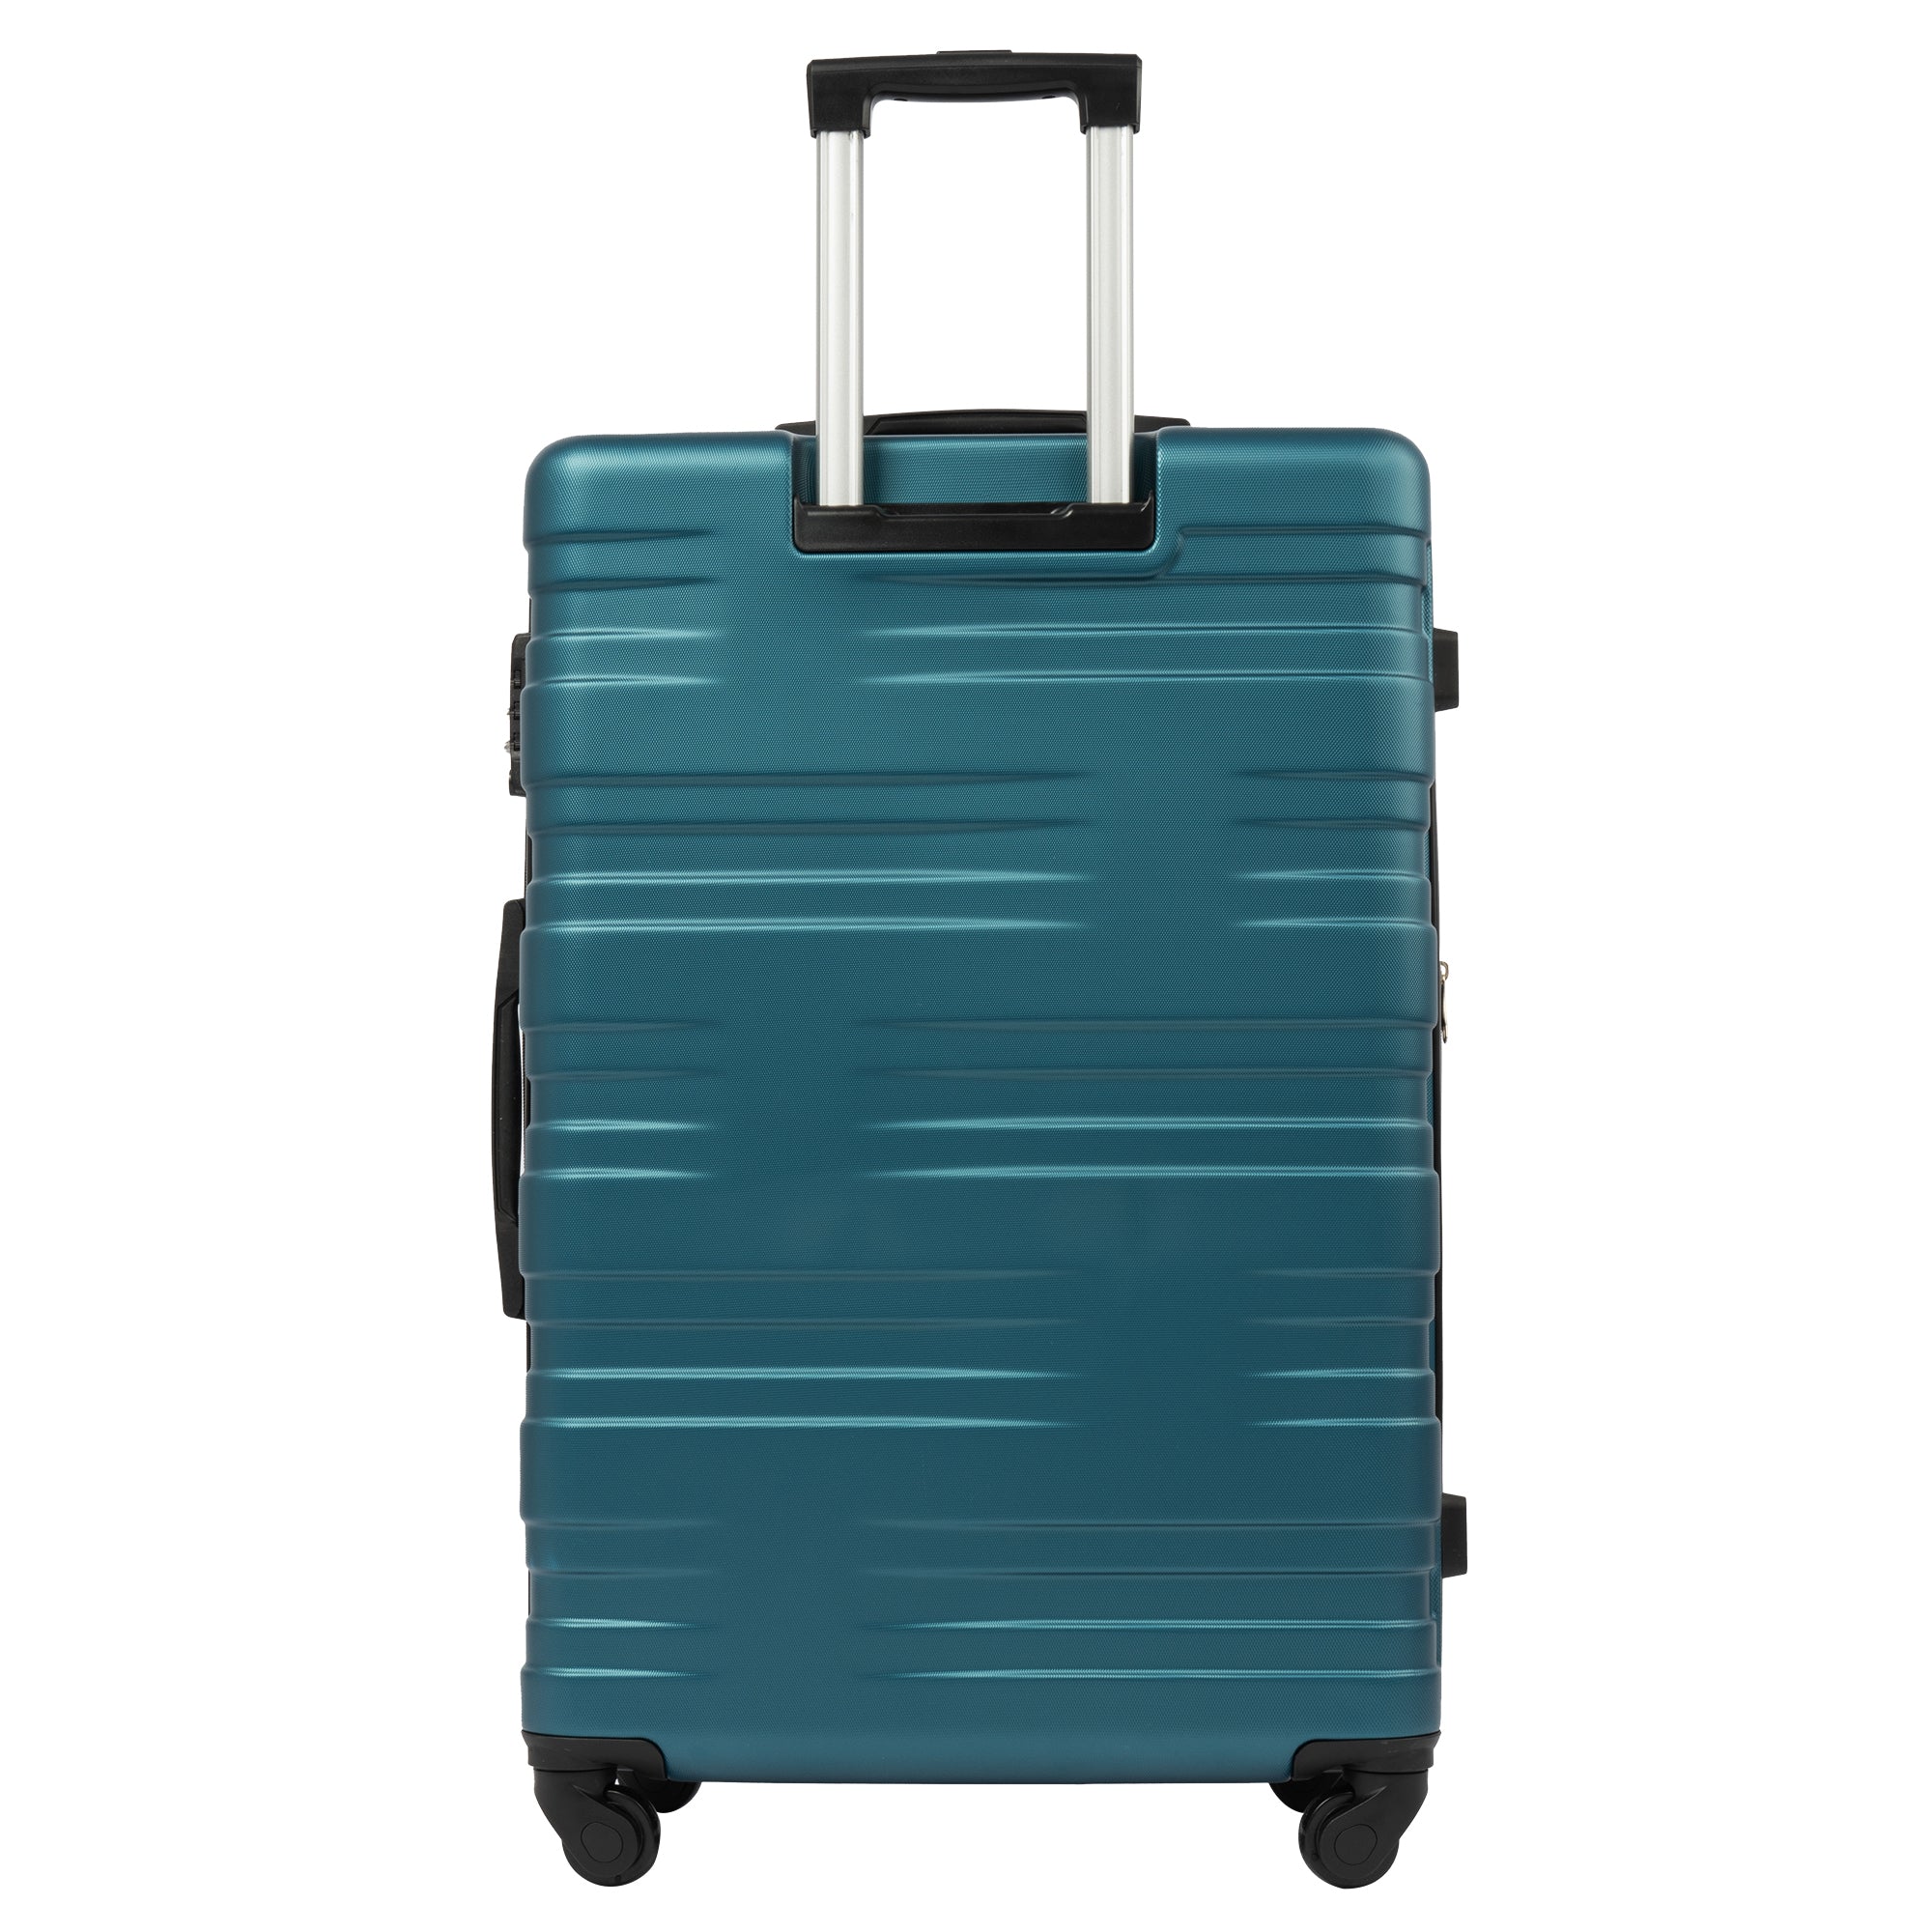 Merax Luggage with TSA Lock Spinner Wheels Hardside antique blue green-abs